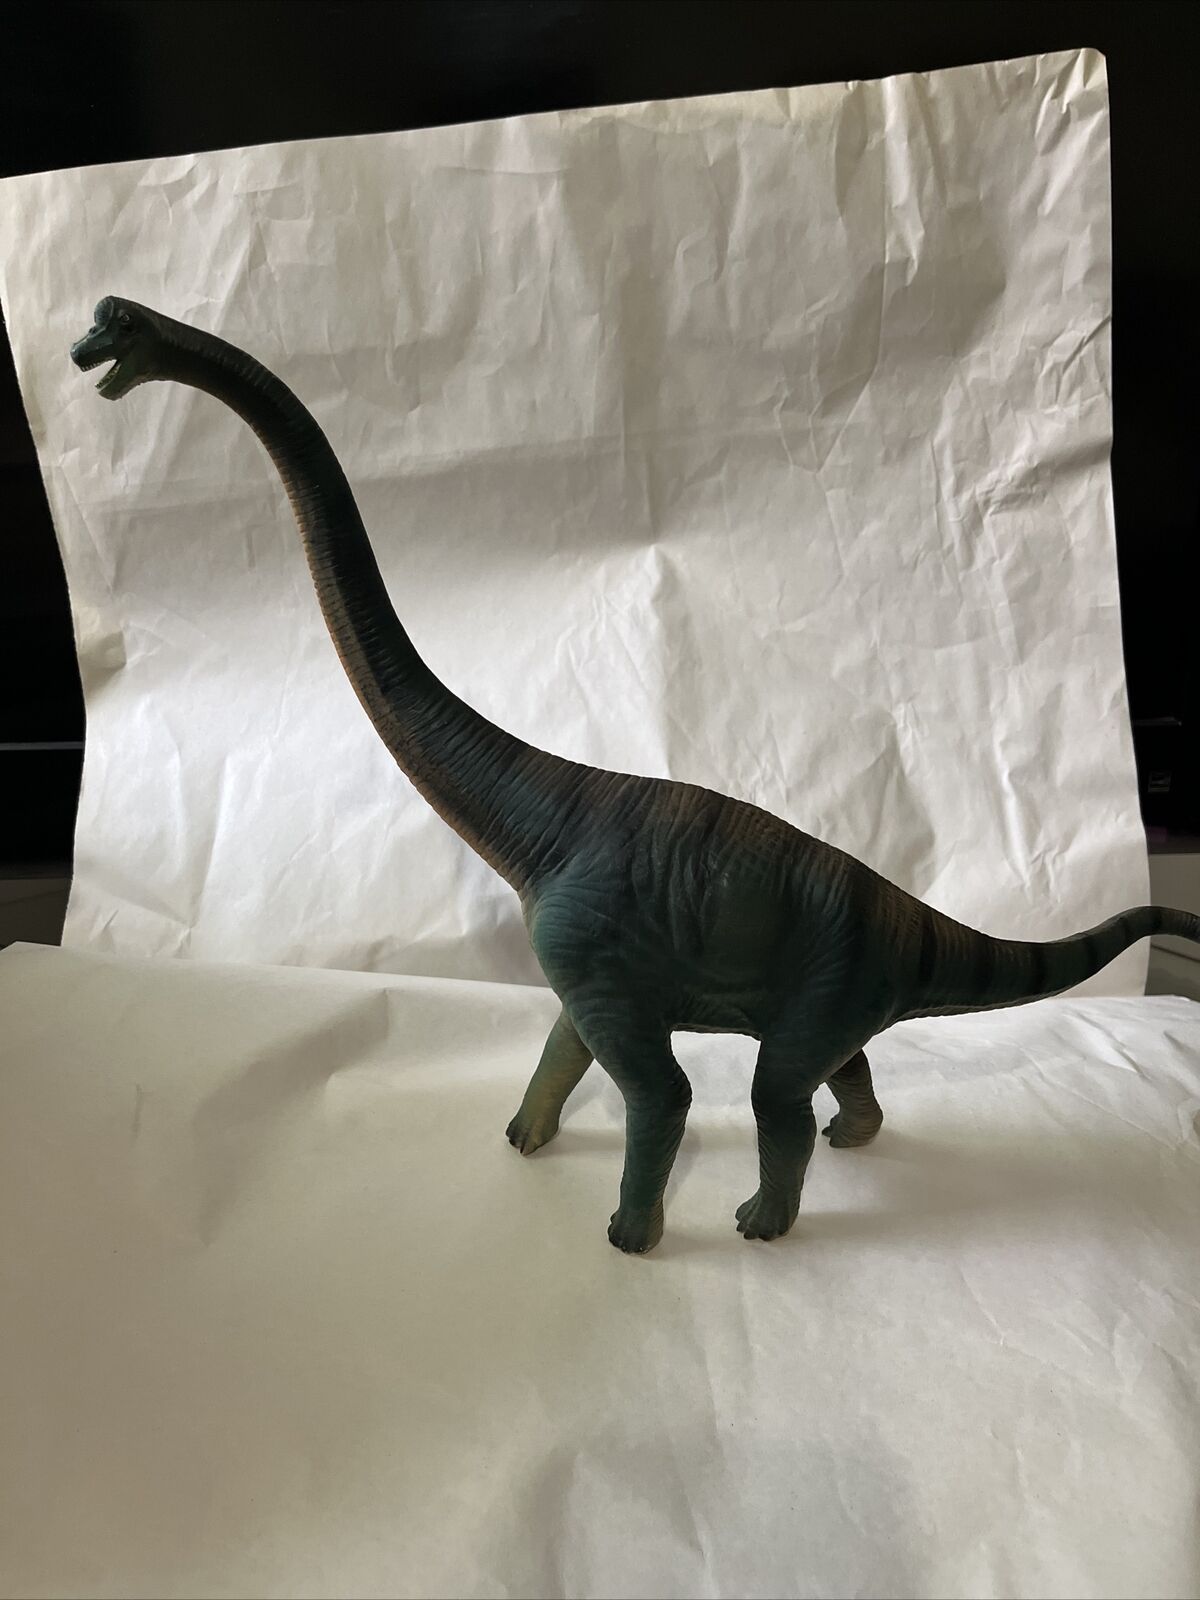 LARGE Bullyland Brachiosaurus Dinosaur Figure Green Rubber Foam Core 14” By 11”